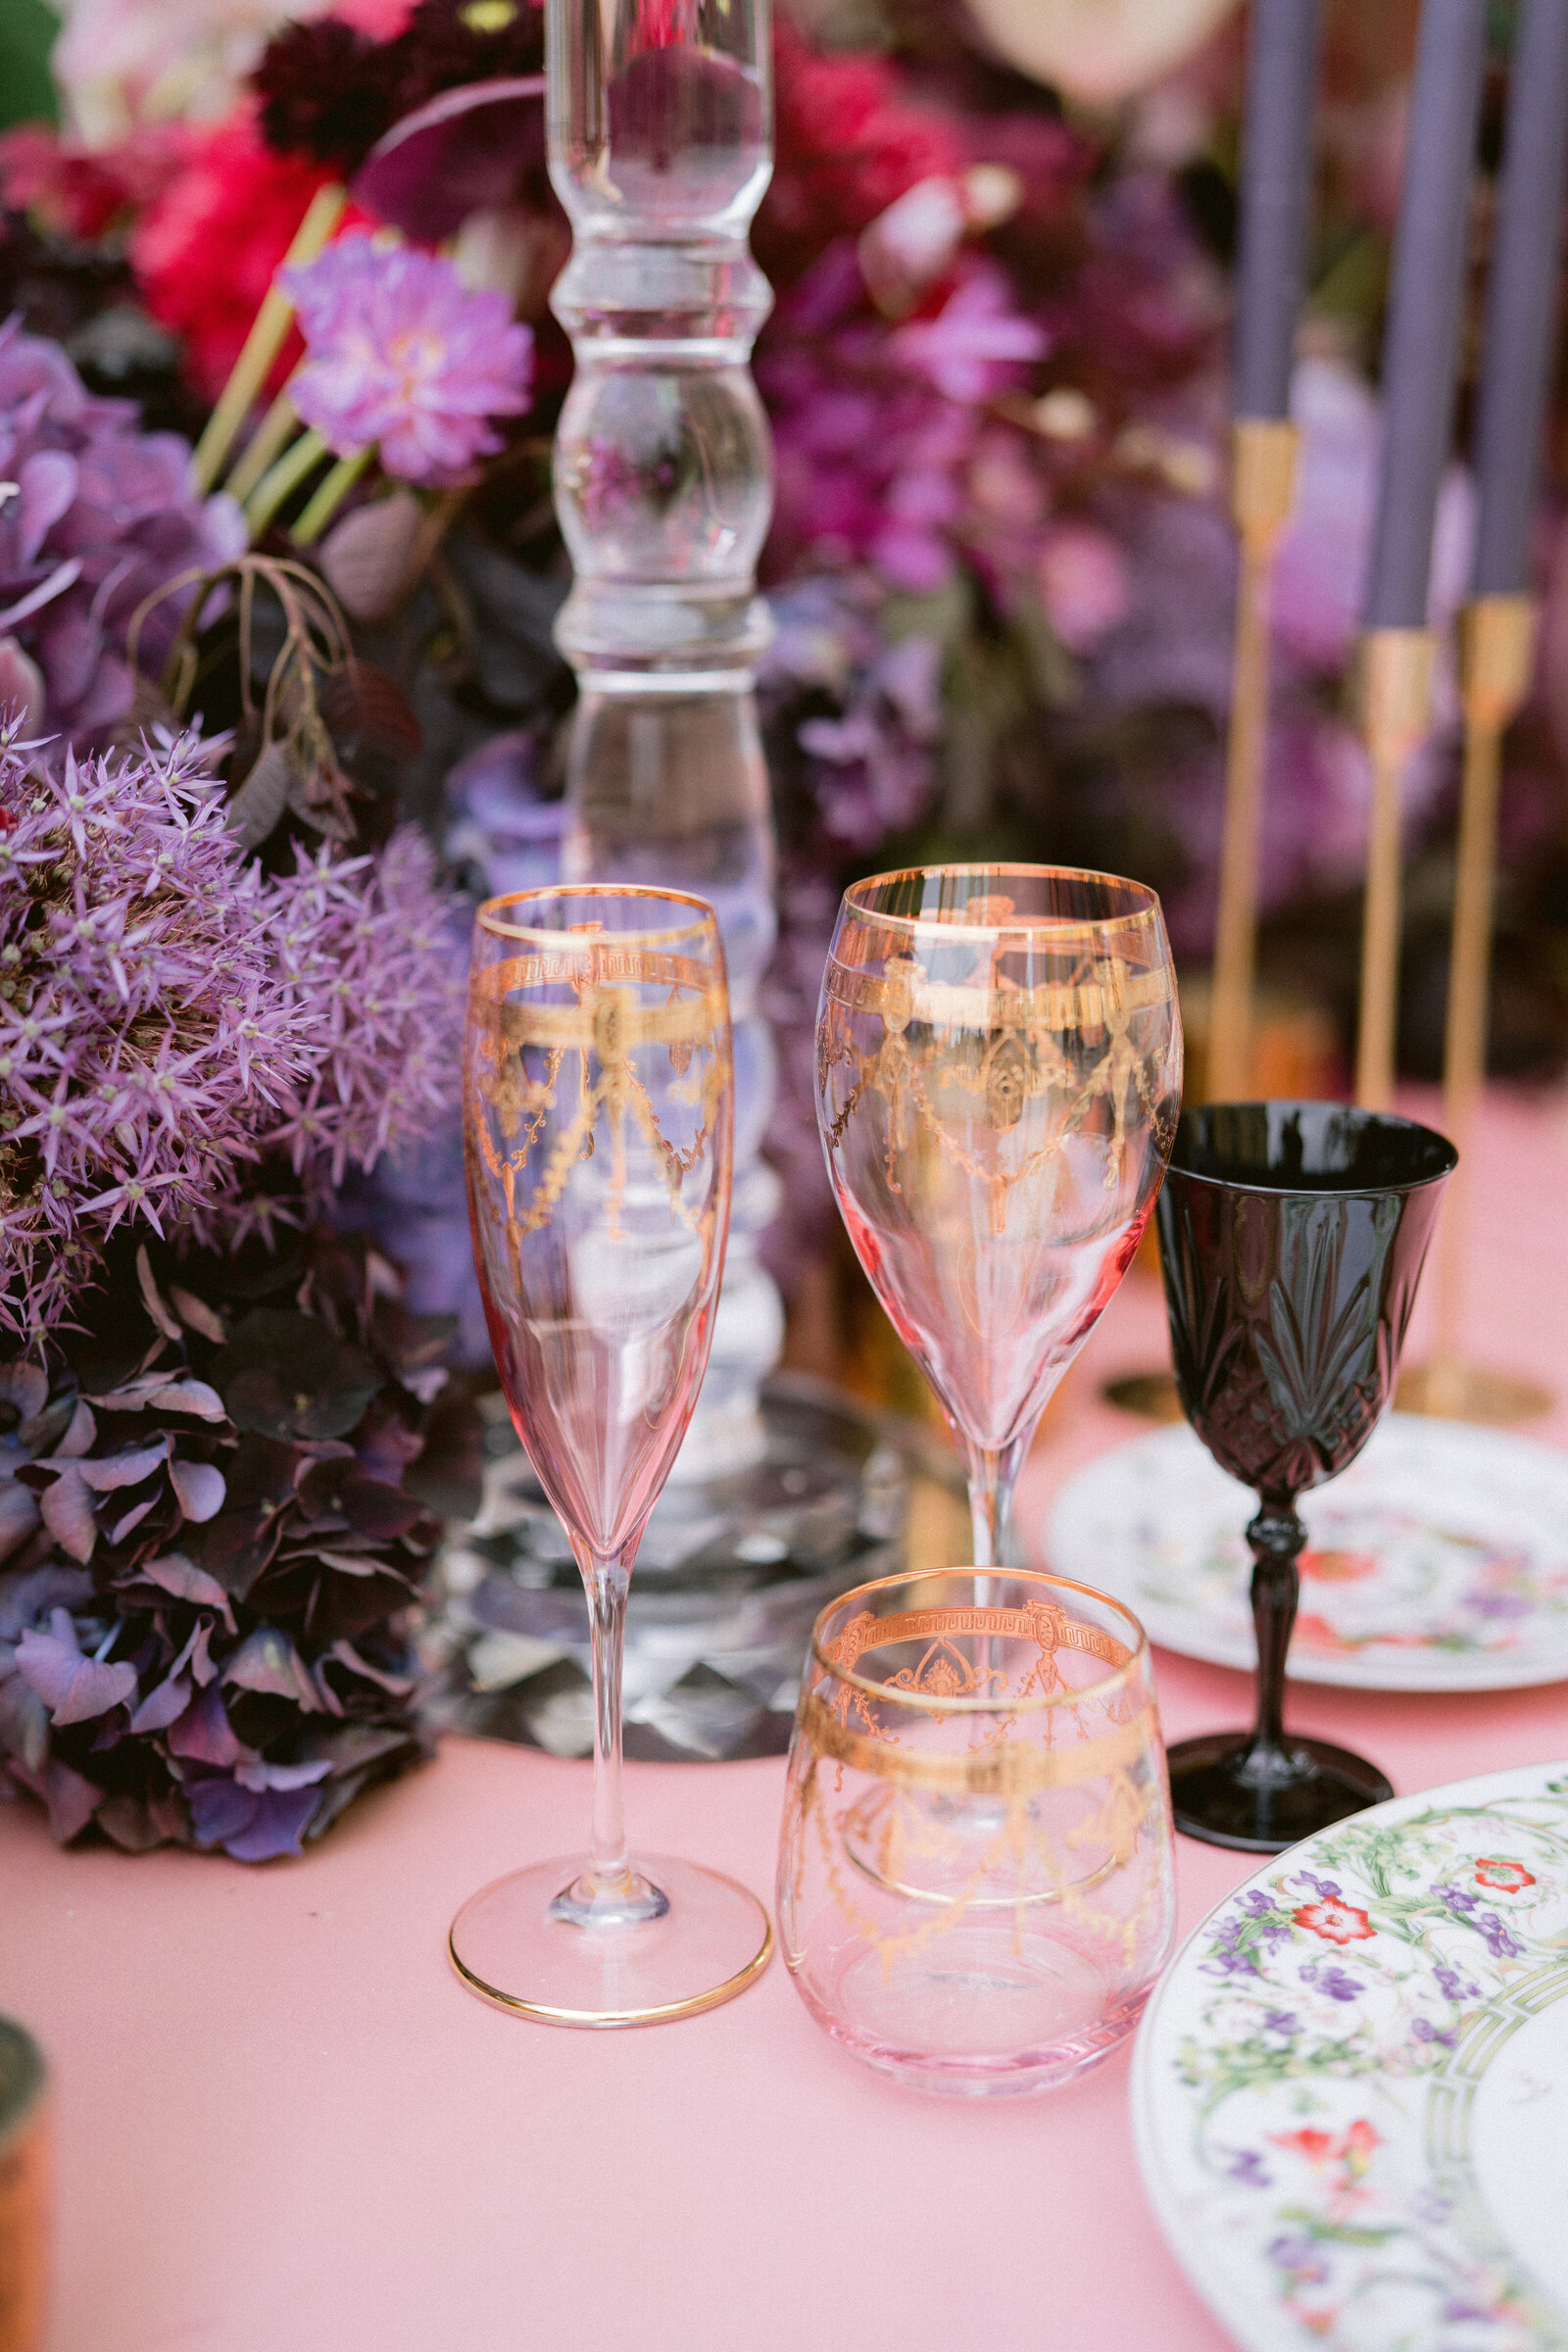 VERSACE CHARGER PLATES GLASSES luxury wedding planner designer France